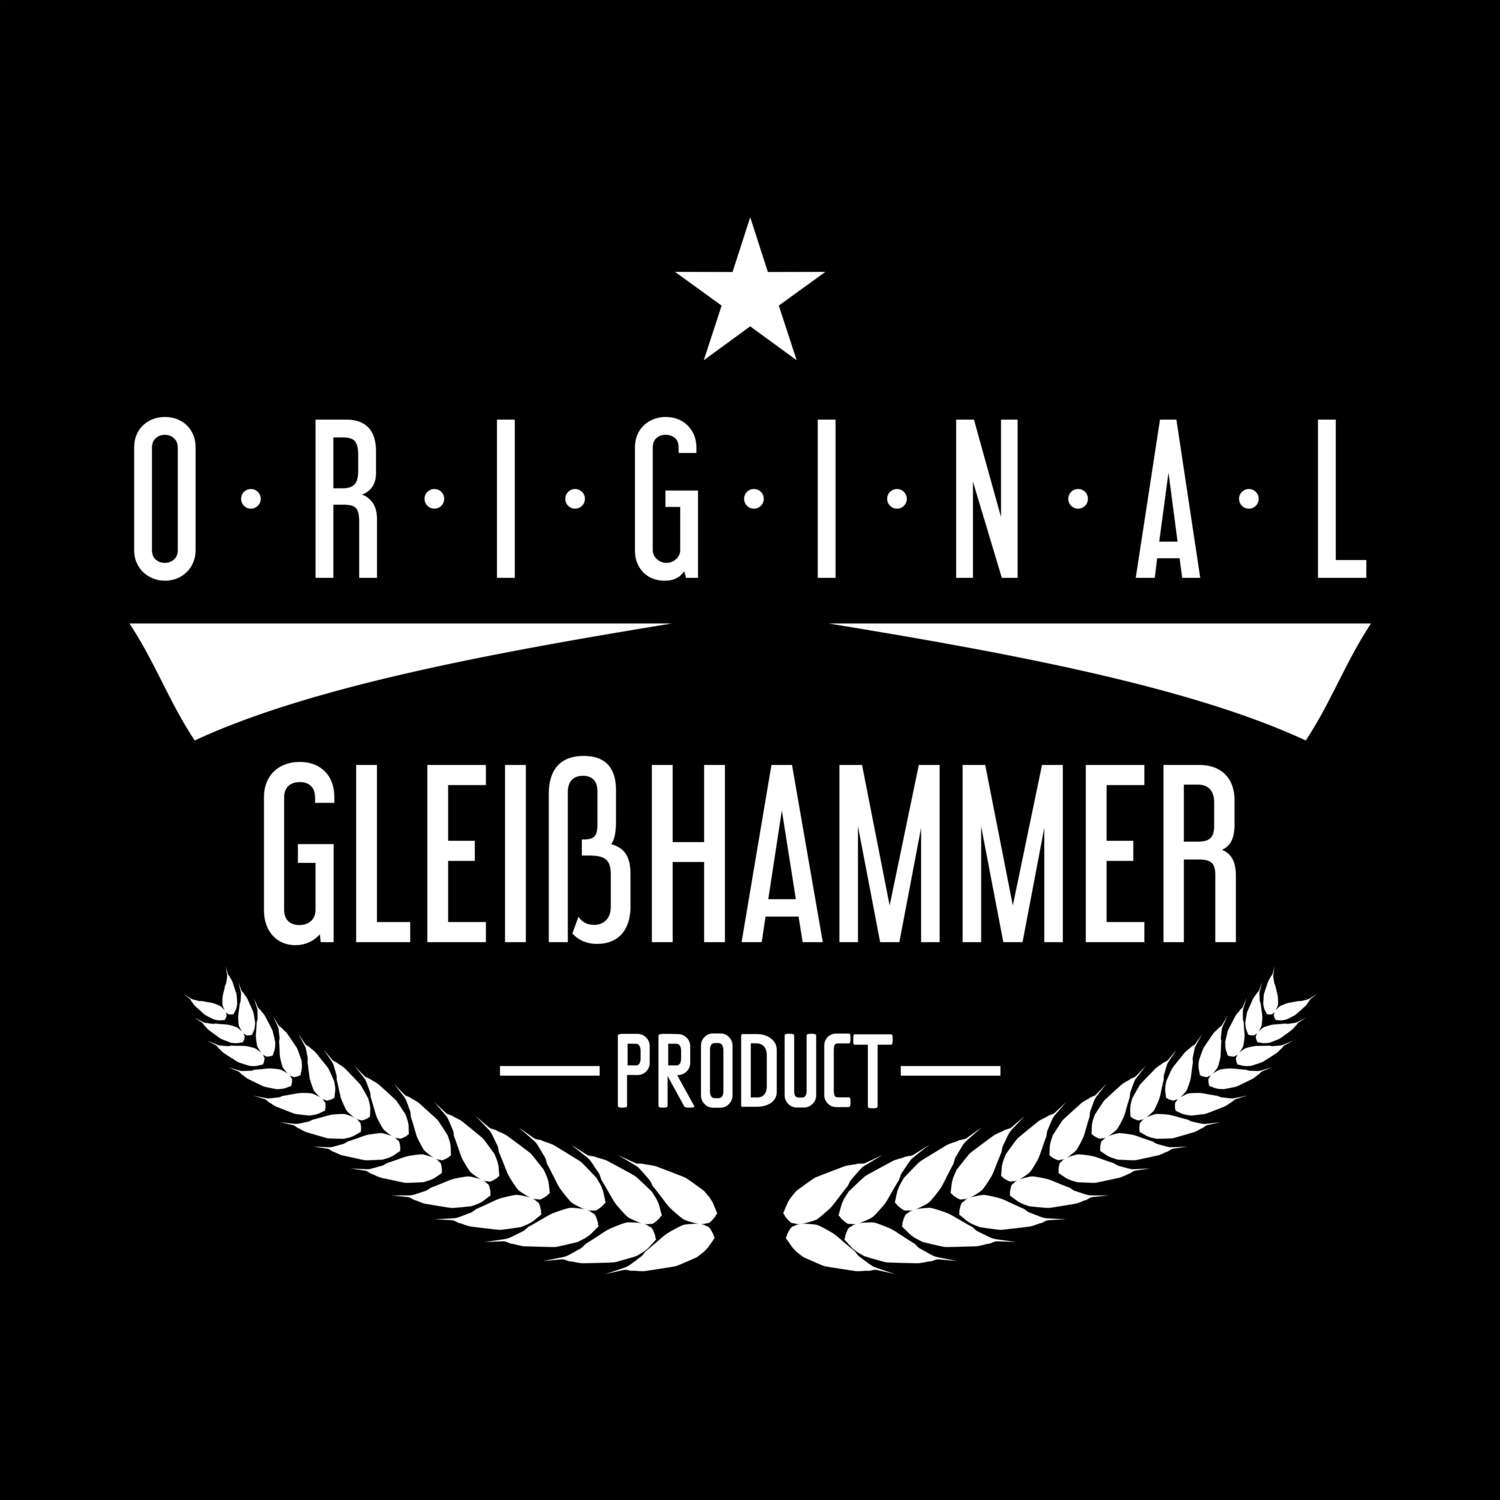 Gleißhammer T-Shirt »Original Product«